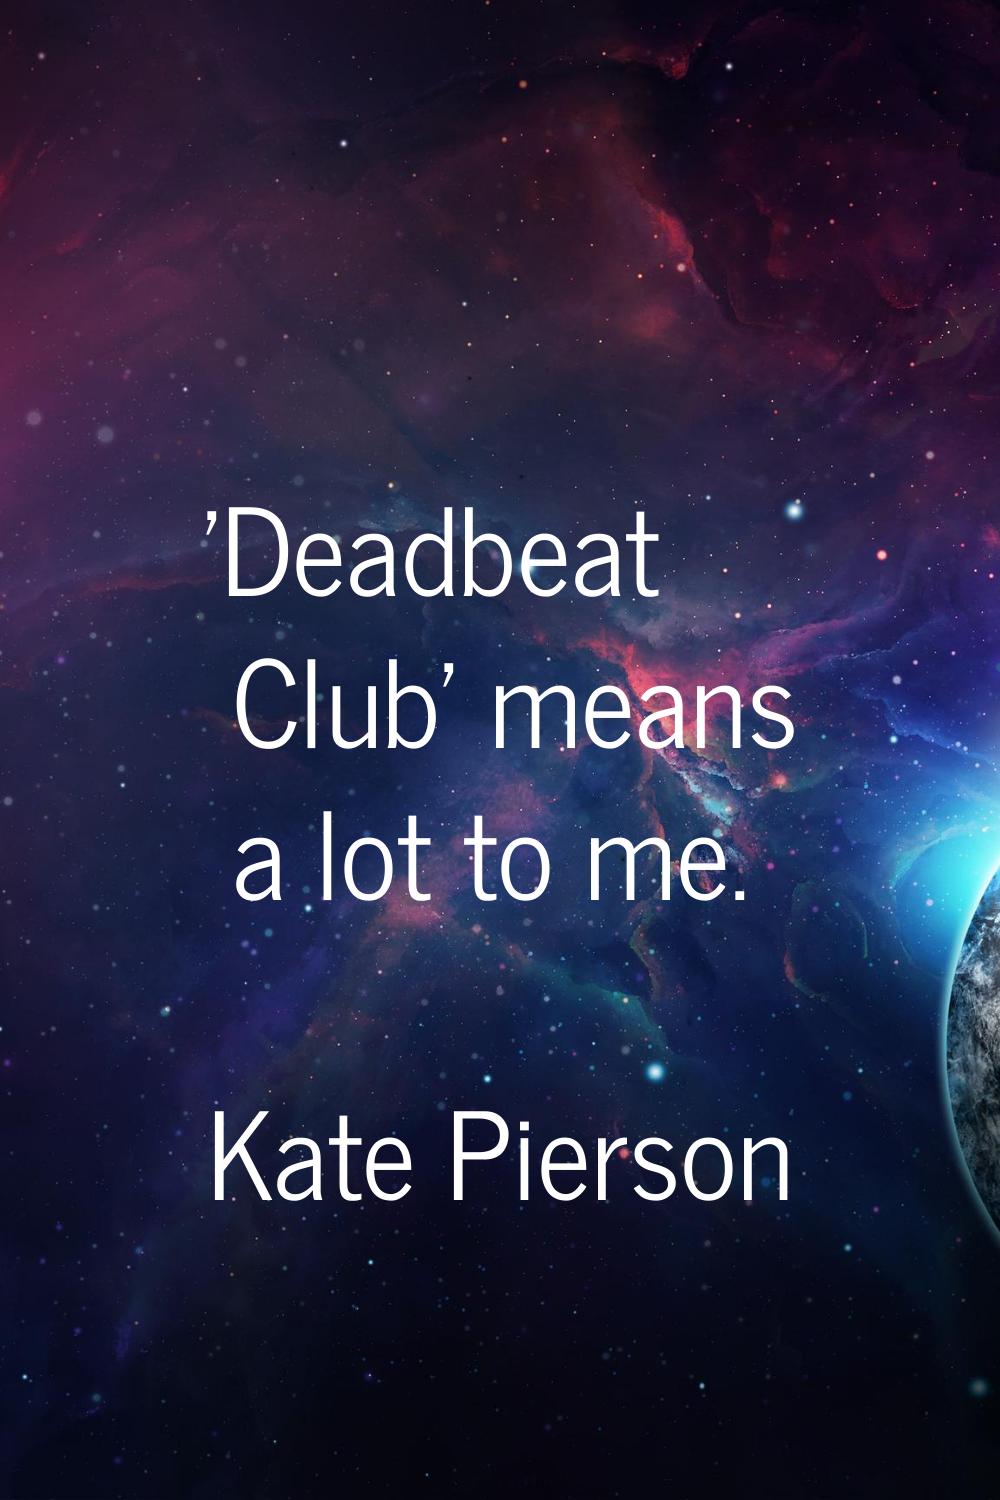 'Deadbeat Club' means a lot to me.